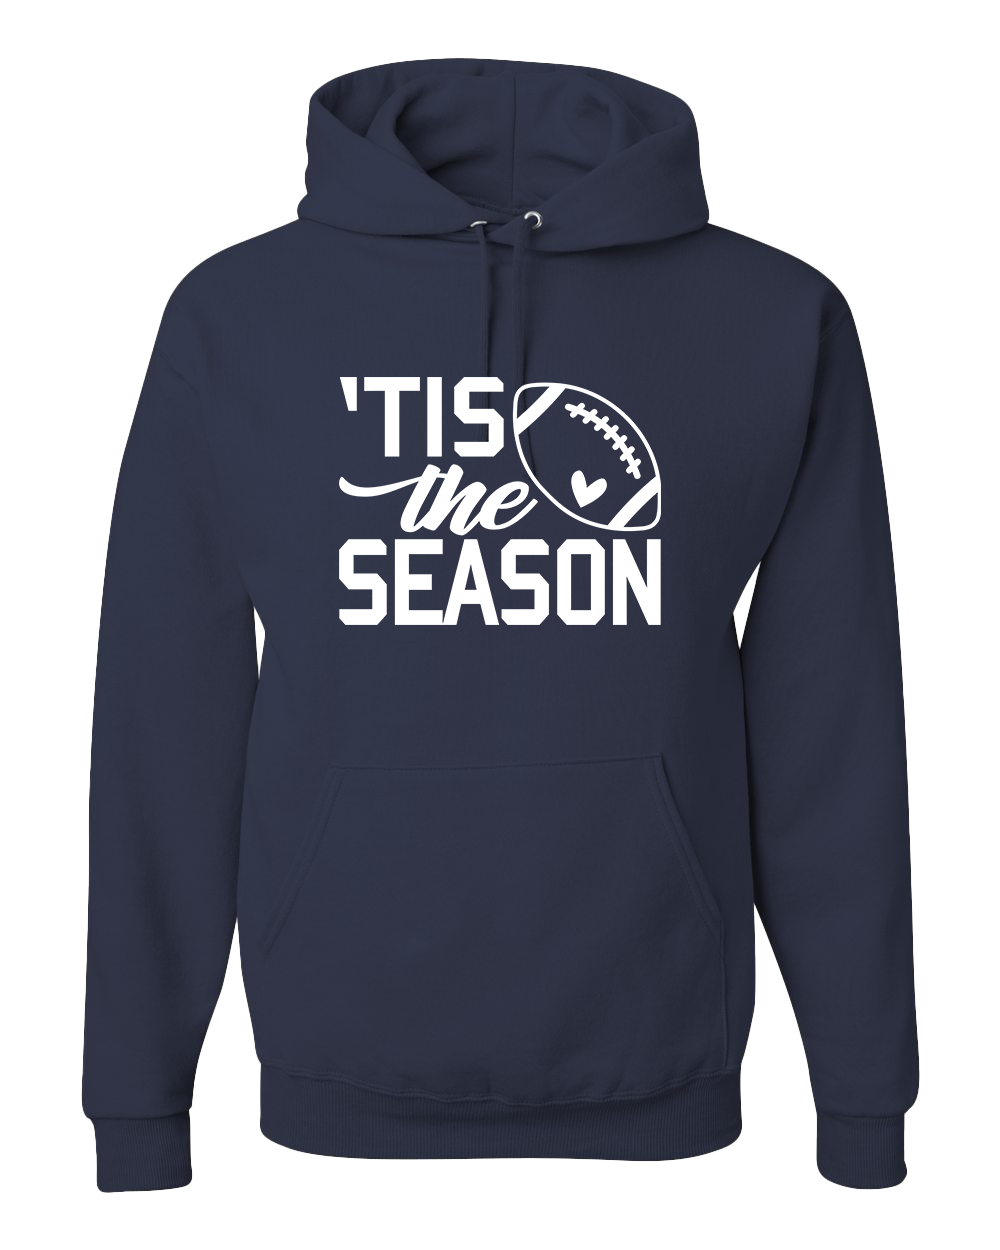 'Tis The Season Football Hooded Sweatshirt - Navy